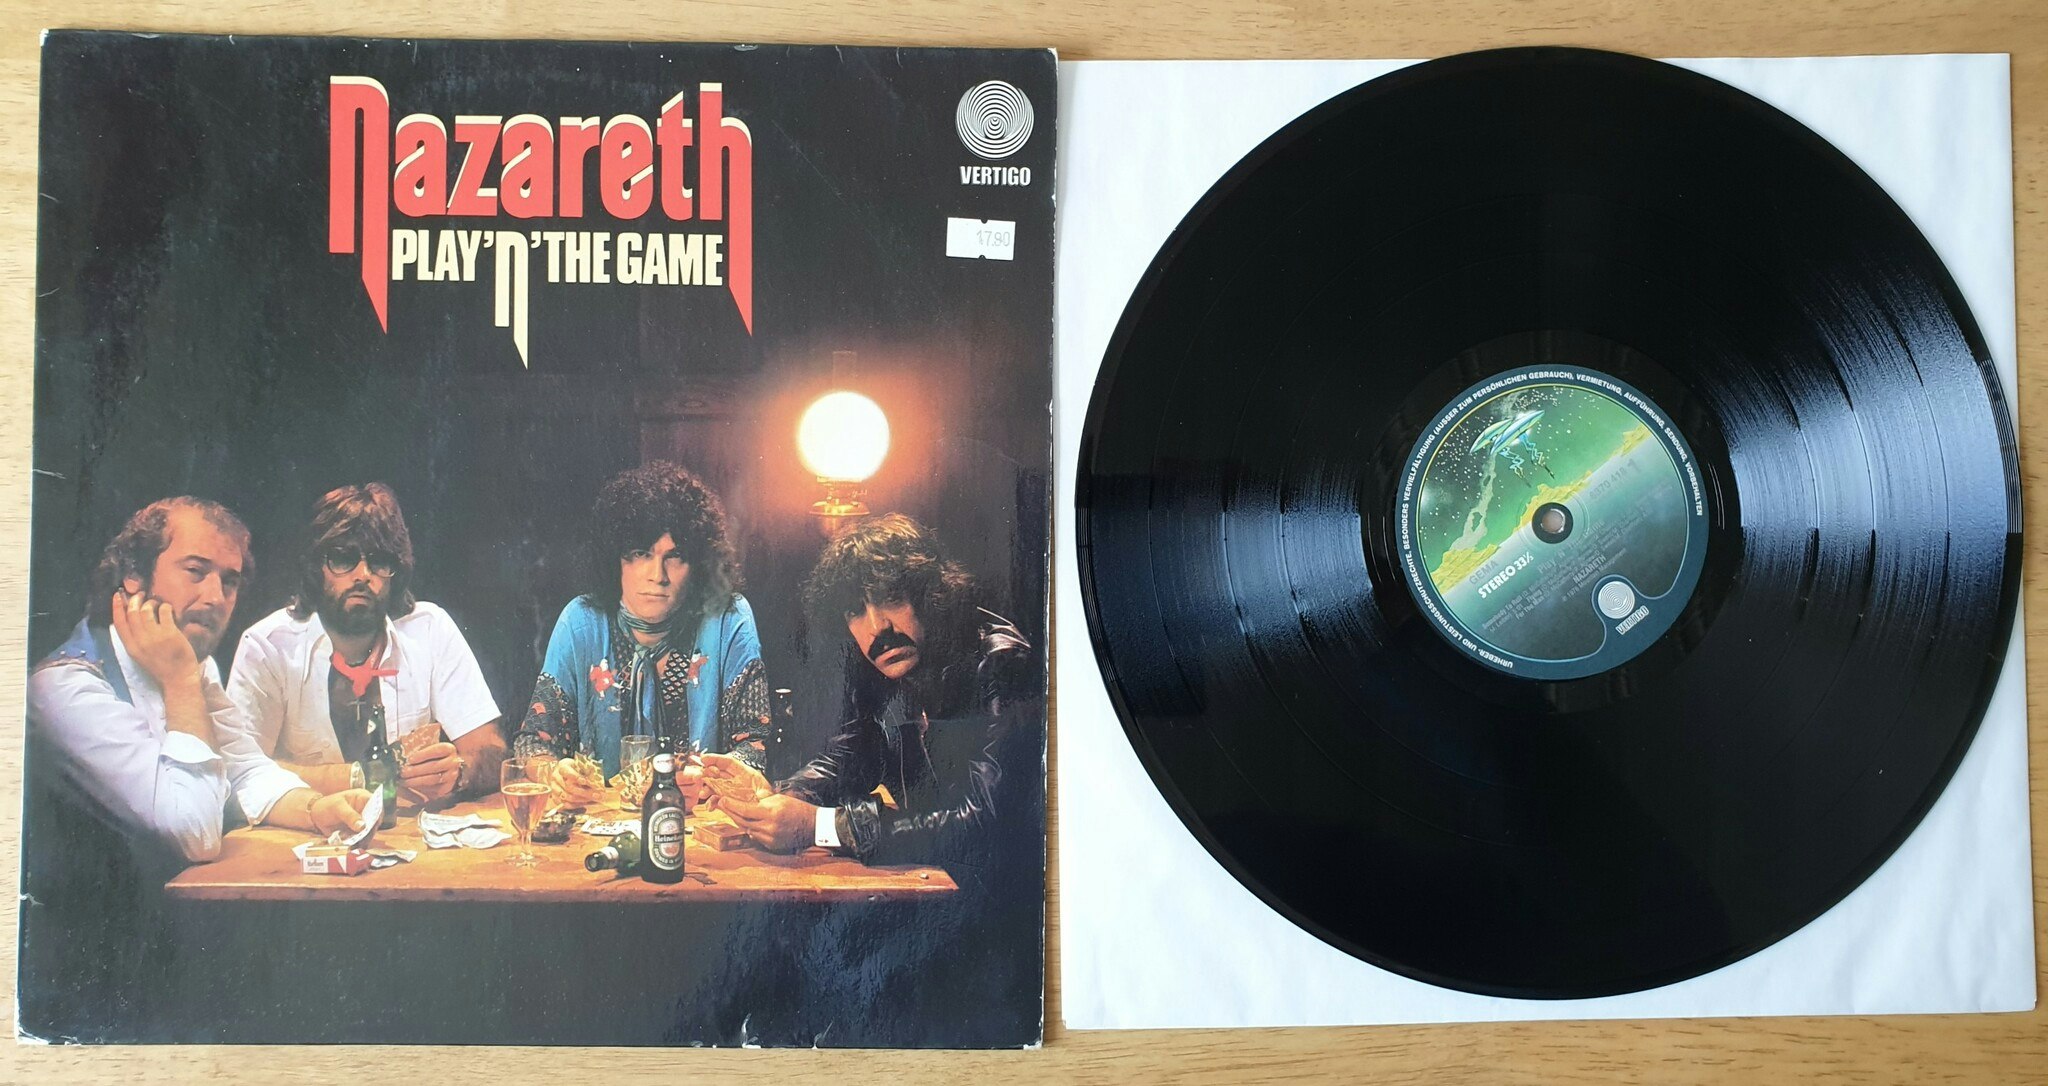 Nazareth, Play 'n' the game. Vinyl LP